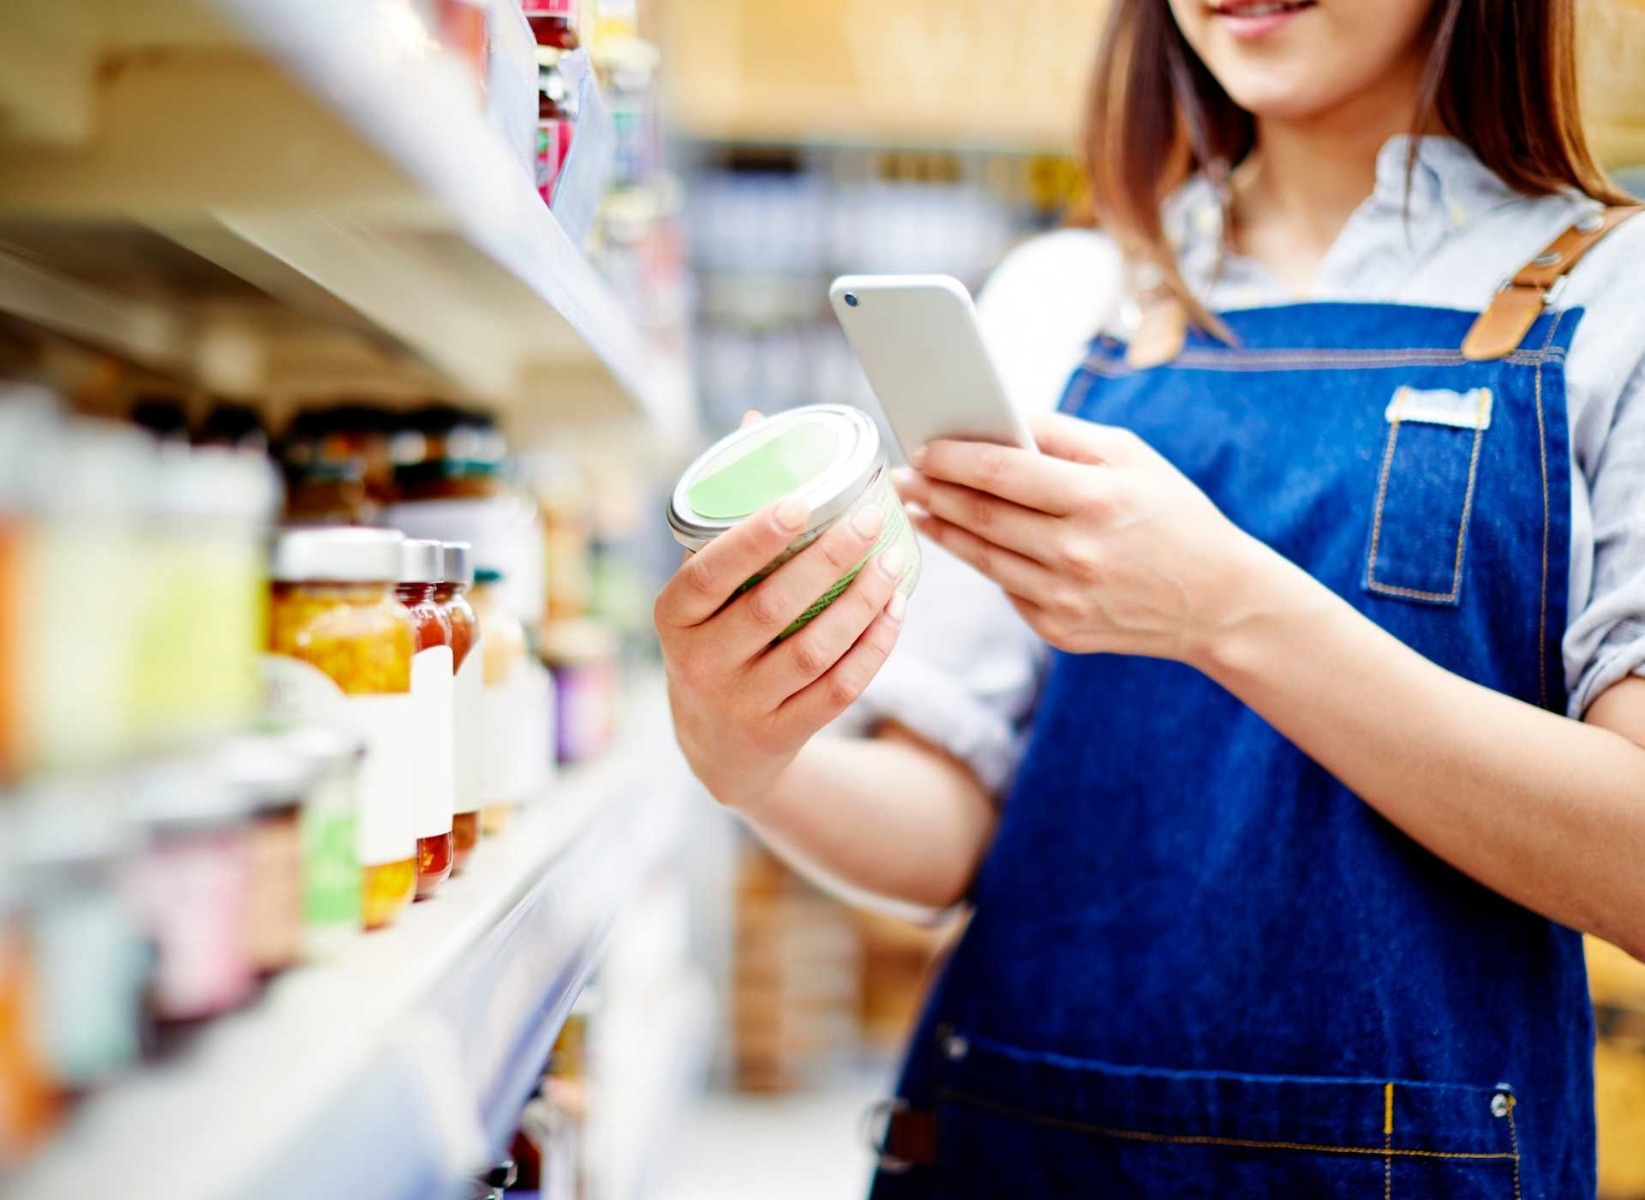 Smart labels deli owner scanning the food through her smartphone